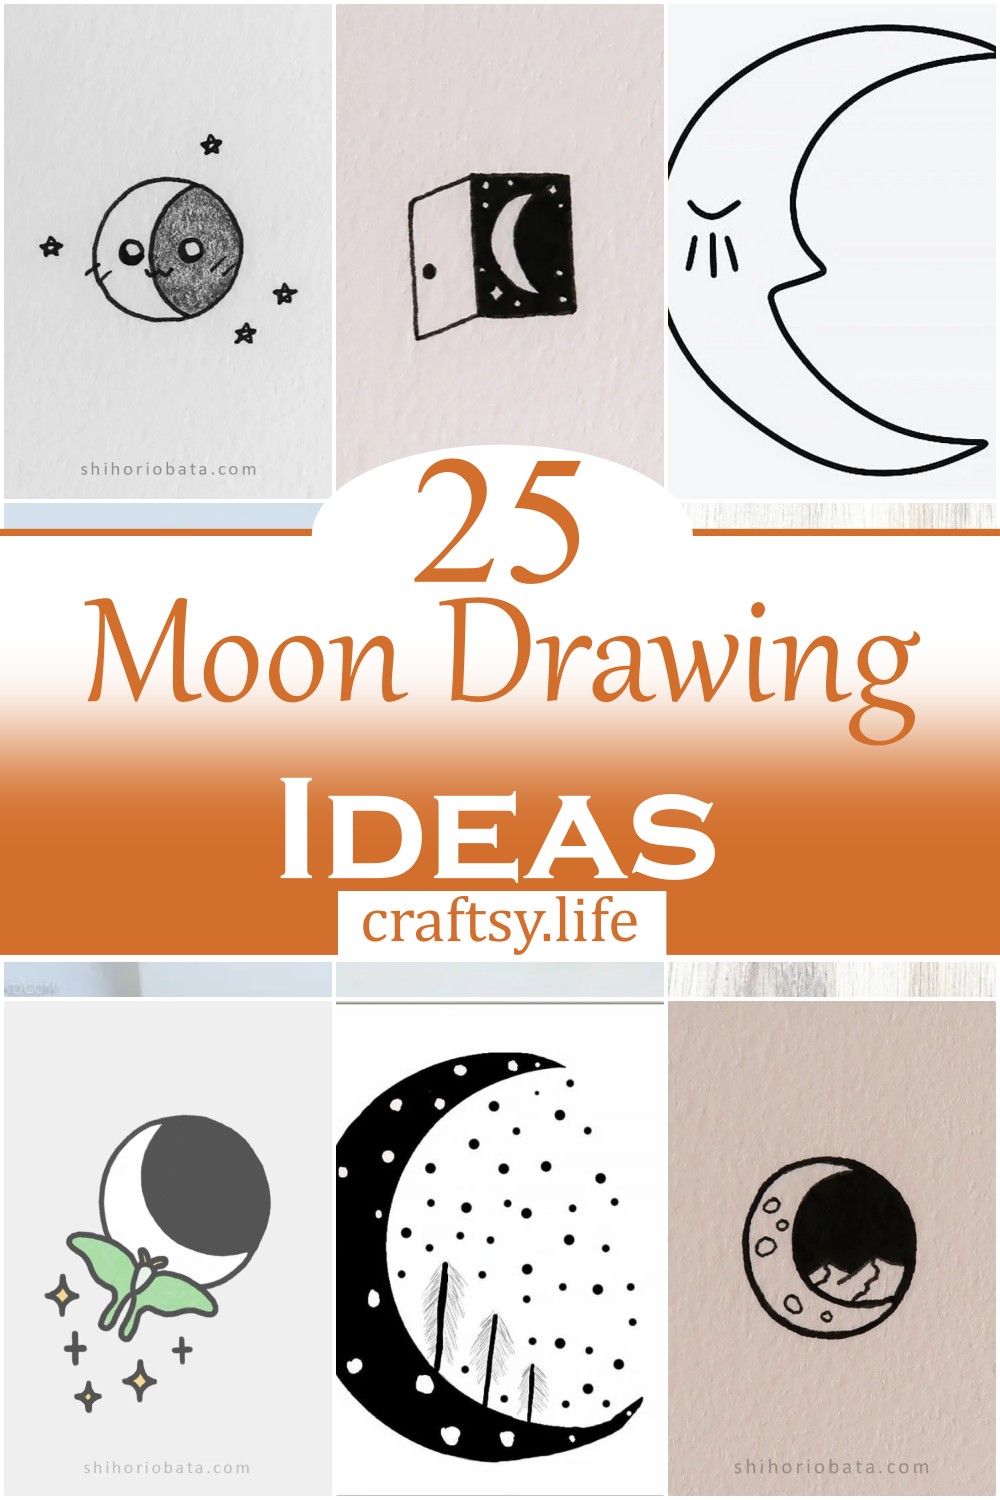 Moon Drawing Ideas